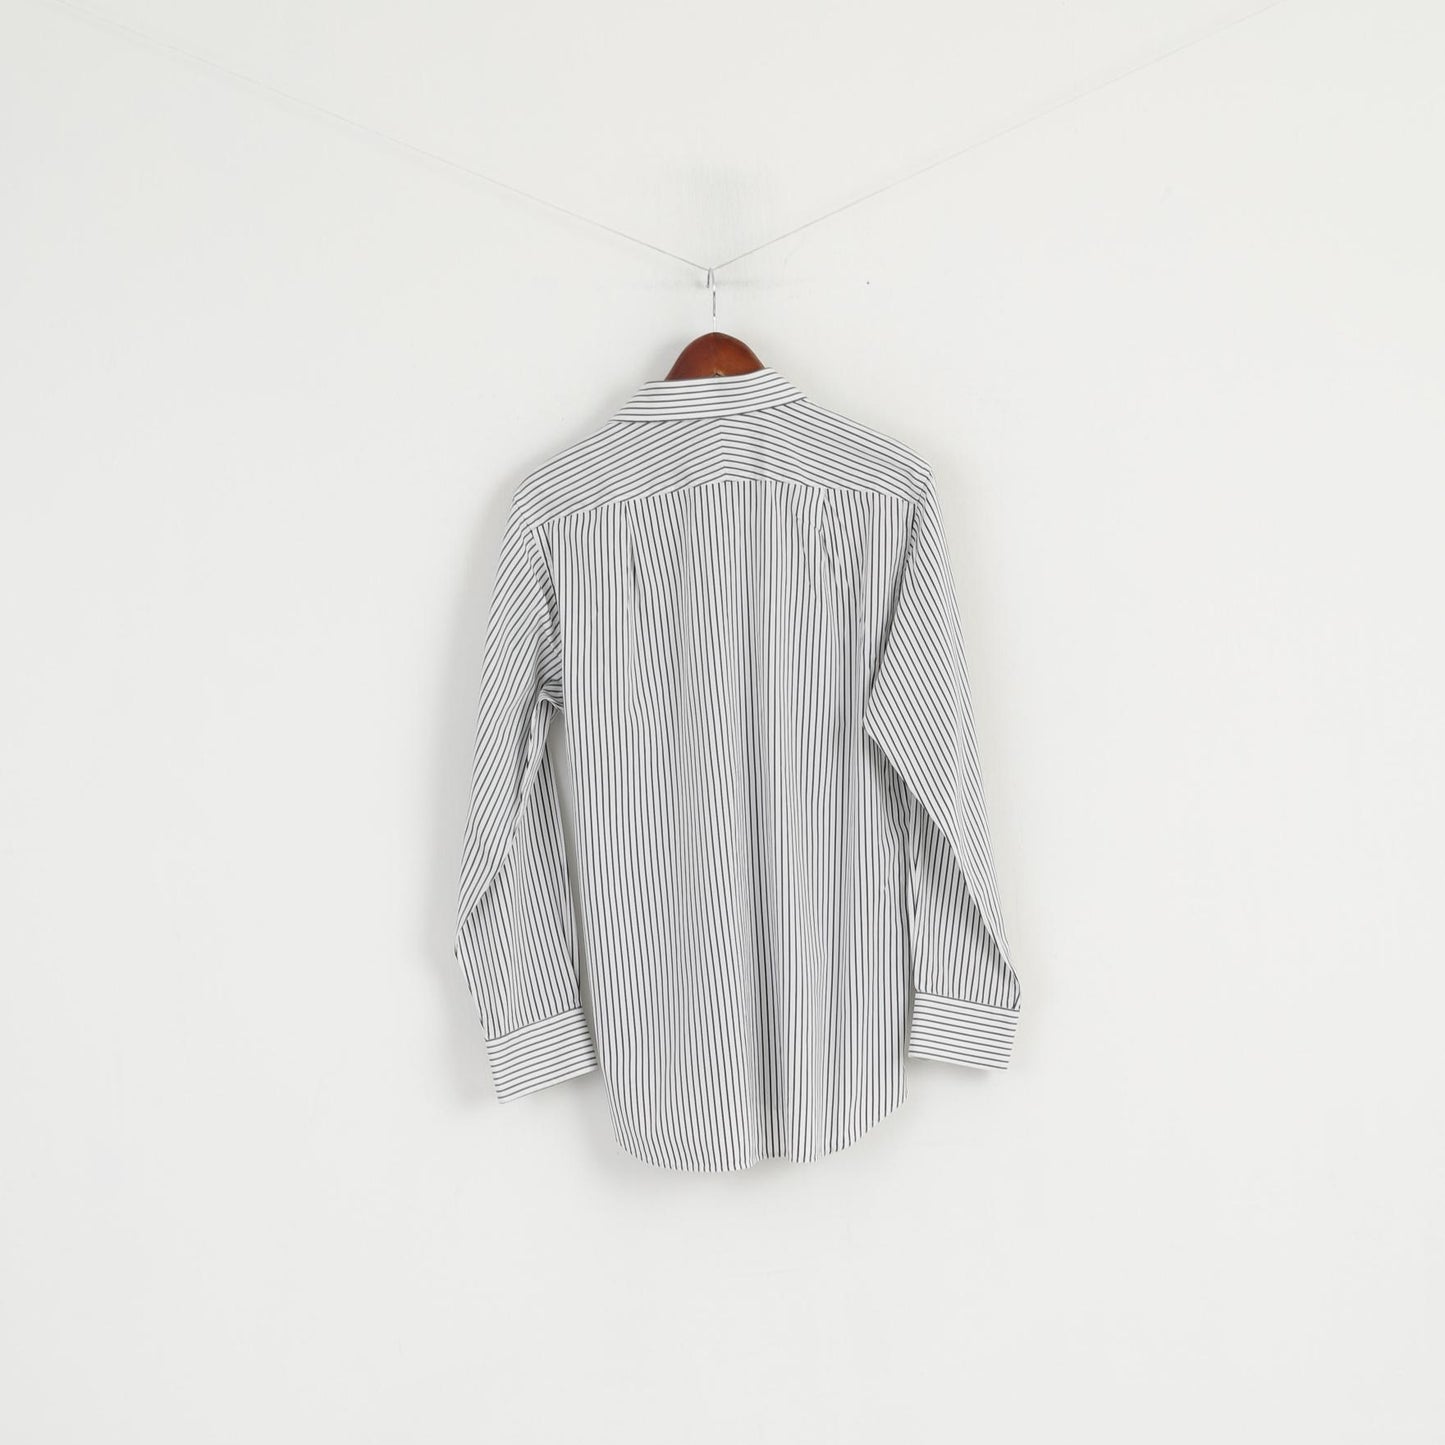 Charles Tyrwhitt Uomo 16 41 M Camicia casual Top a maniche lunghe slim fit in cotone a righe bianche e nere